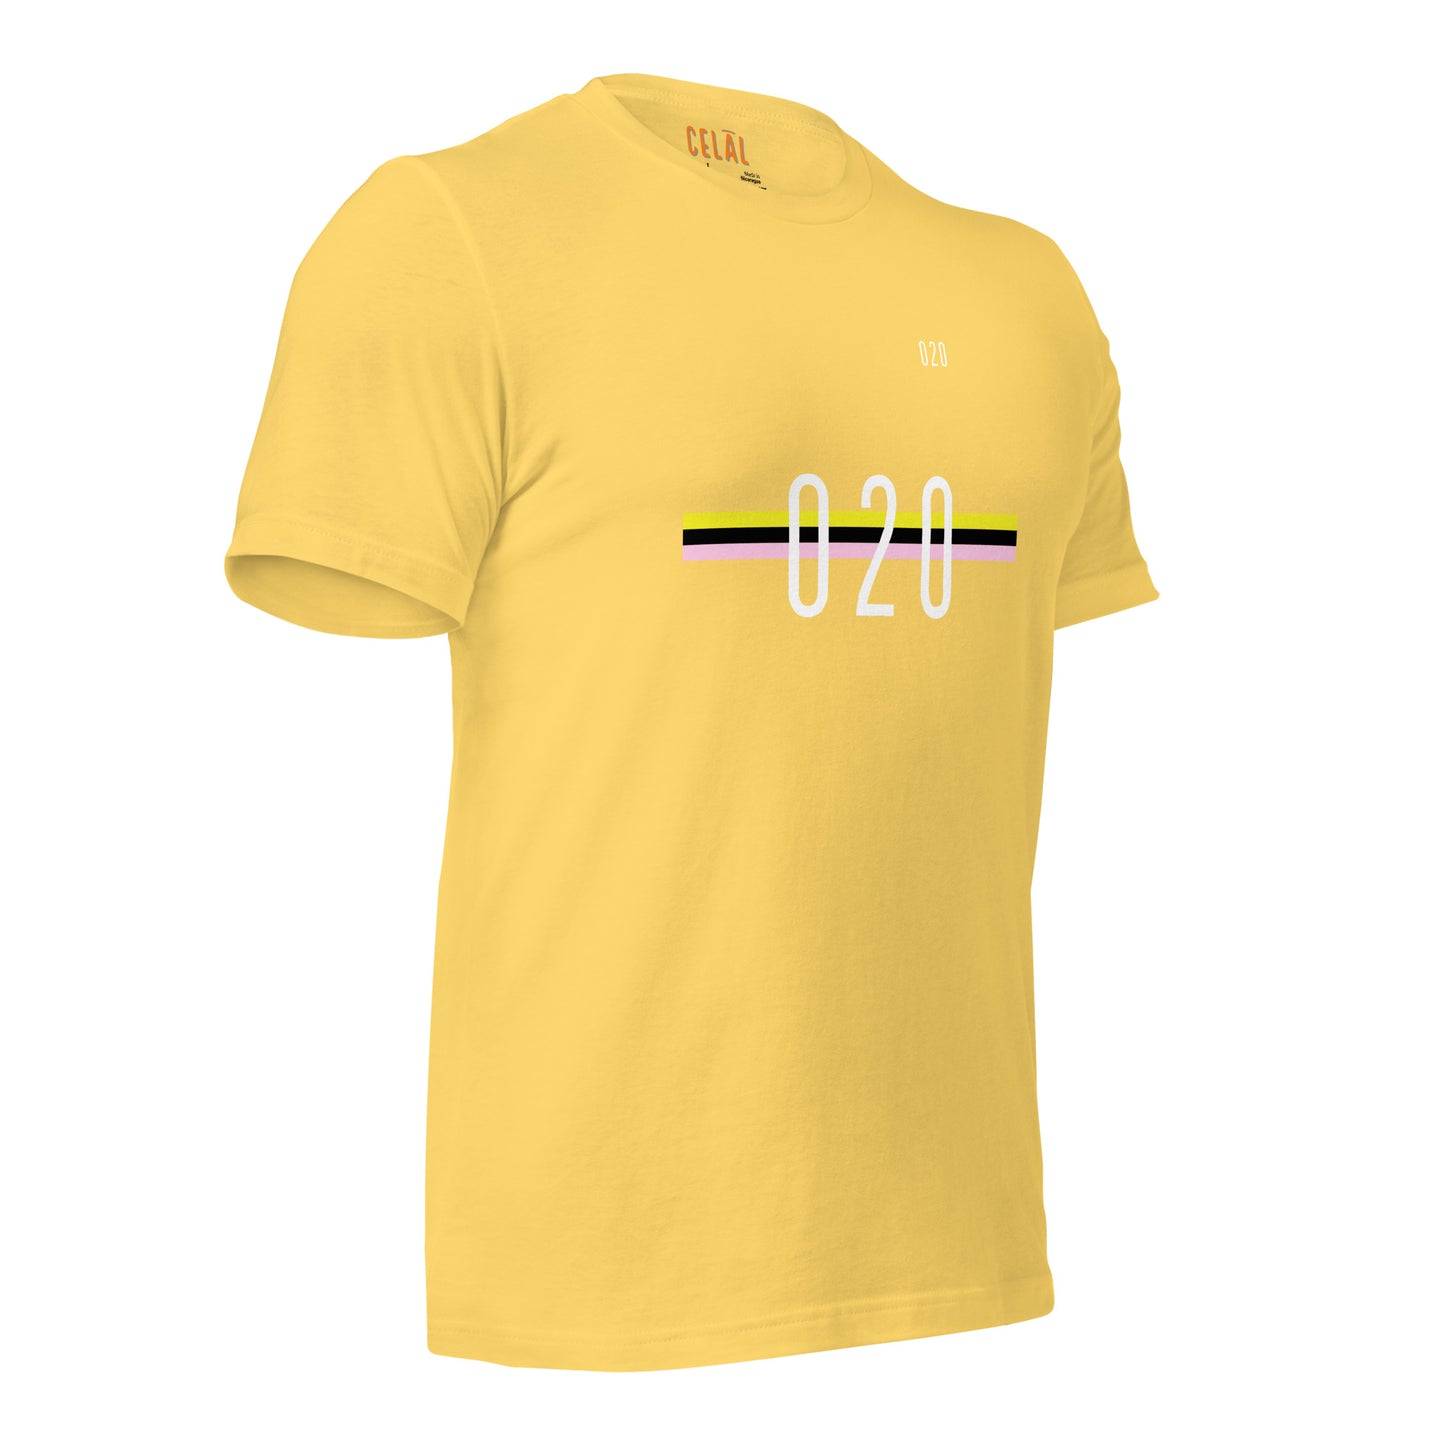 020 Unisex t-shirt